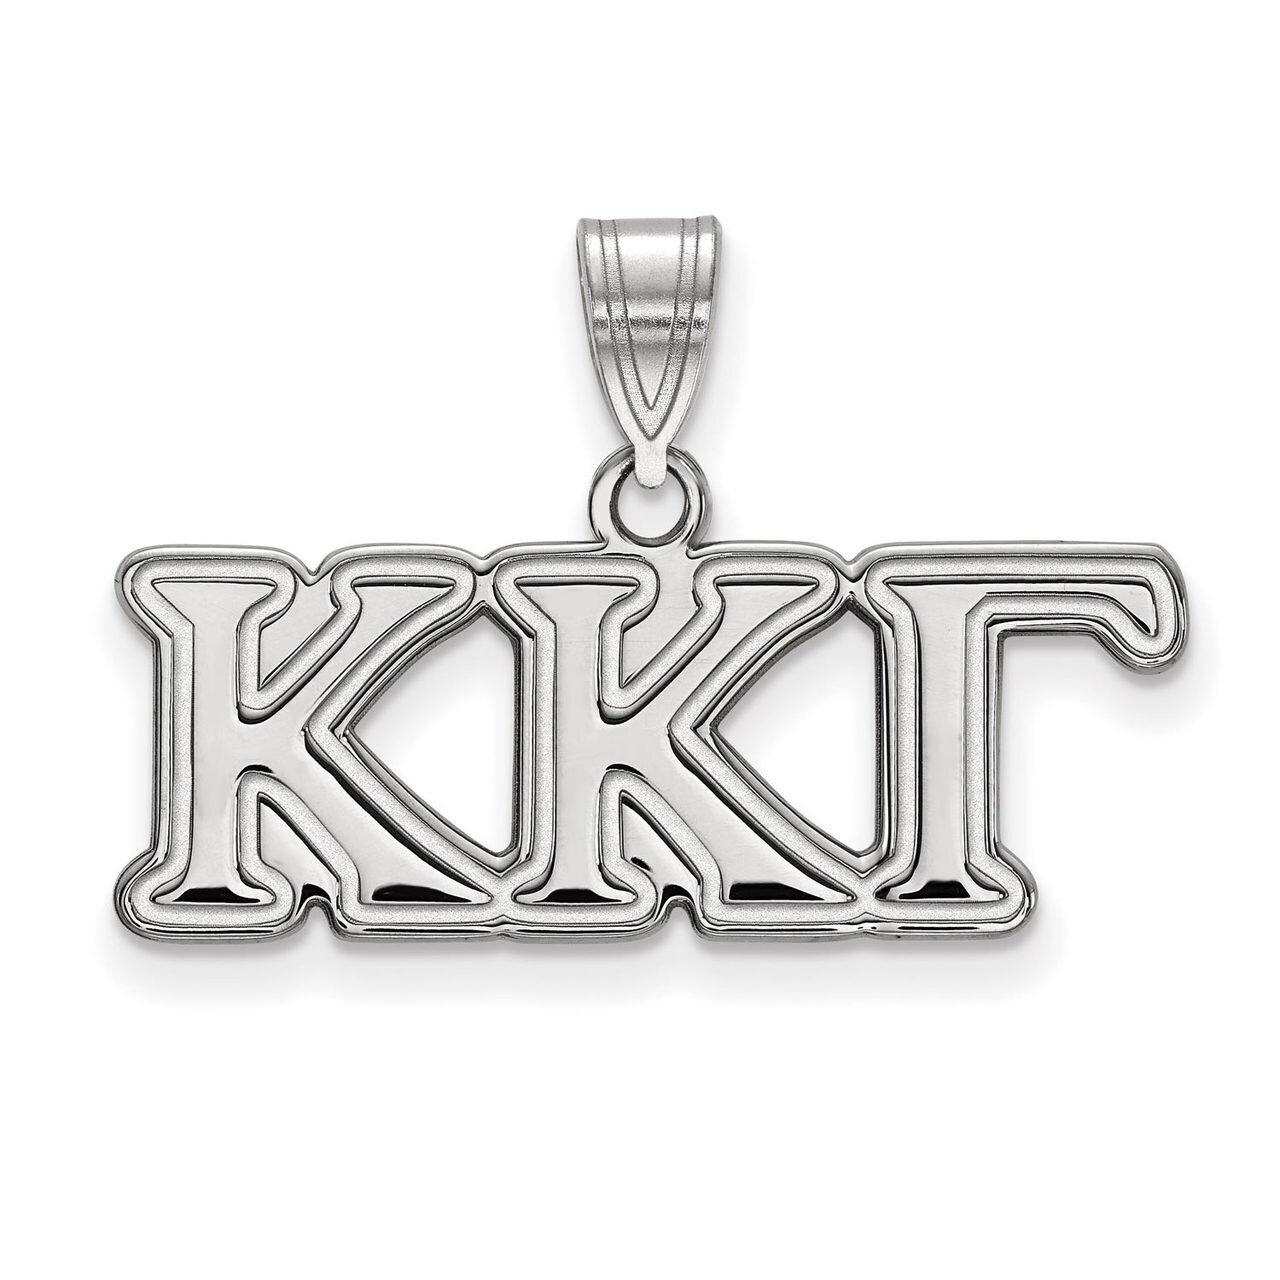 Kappa Kappa Gamma Medium Pendant Sterling Silver SS003KKG